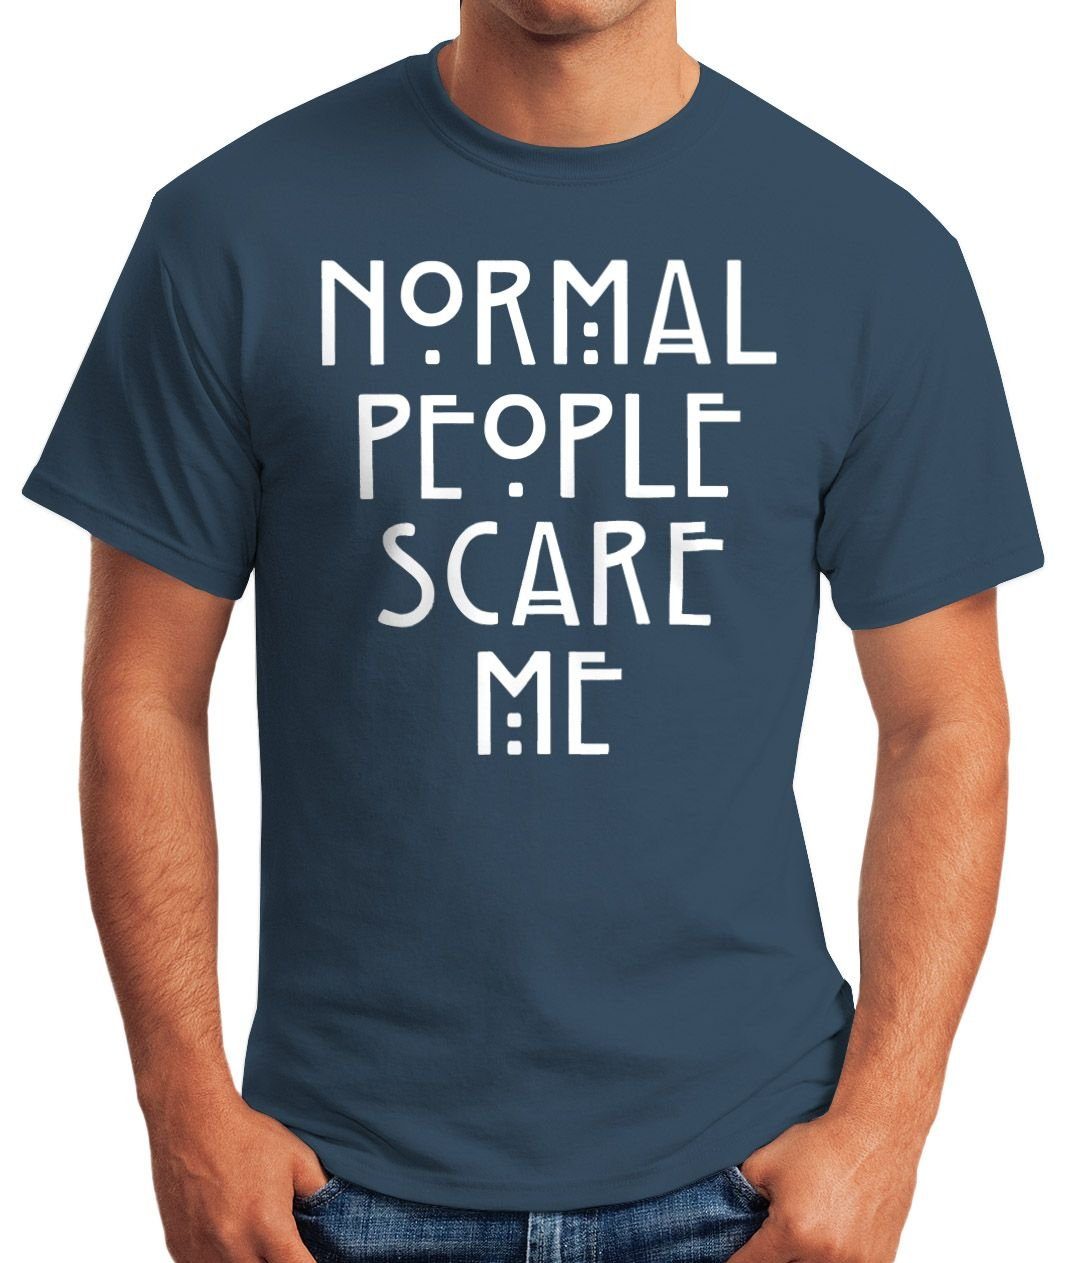 People Fun-Shirt mit Me Scare Normal Moonworks® MoonWorks blau Print-Shirt T-Shirt Herren Print